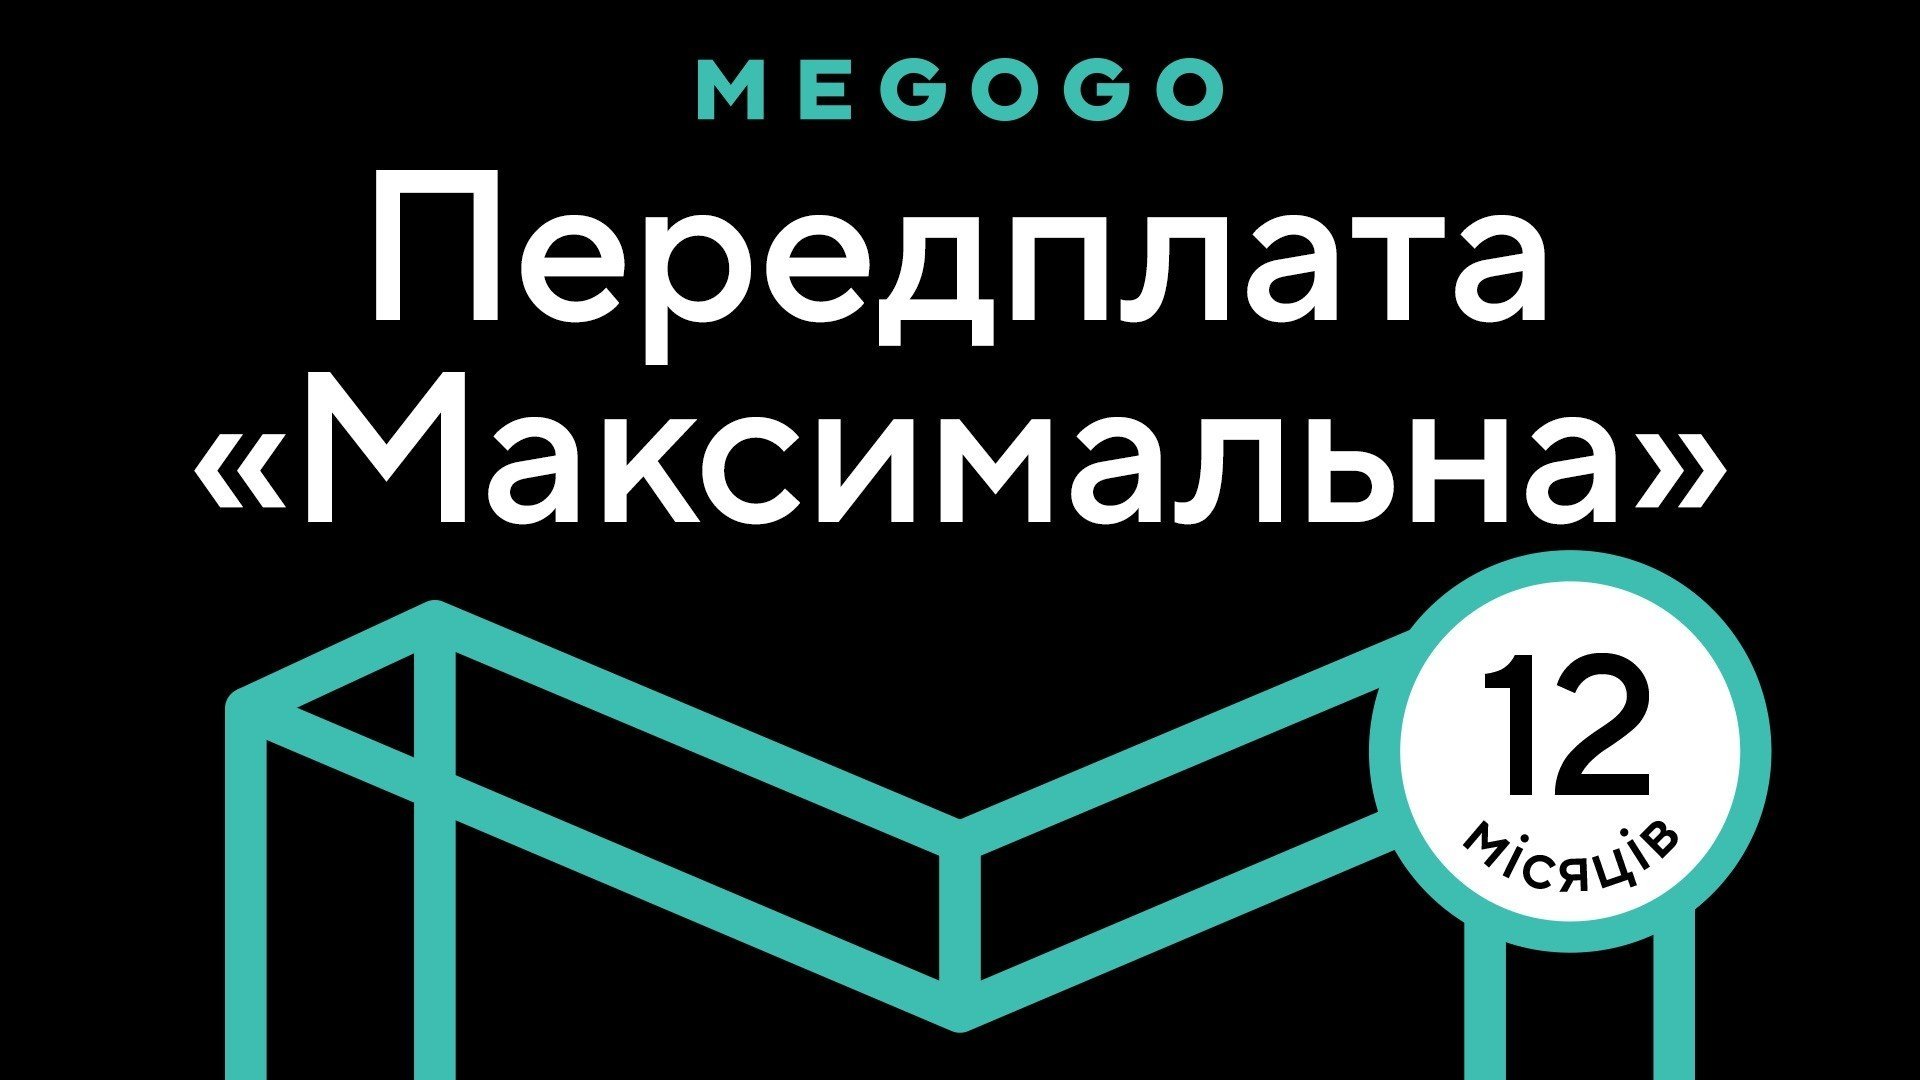 MEGOGO "Кіно і ТБ: Максимальна" на 12 міс - samsungshop.com.ua